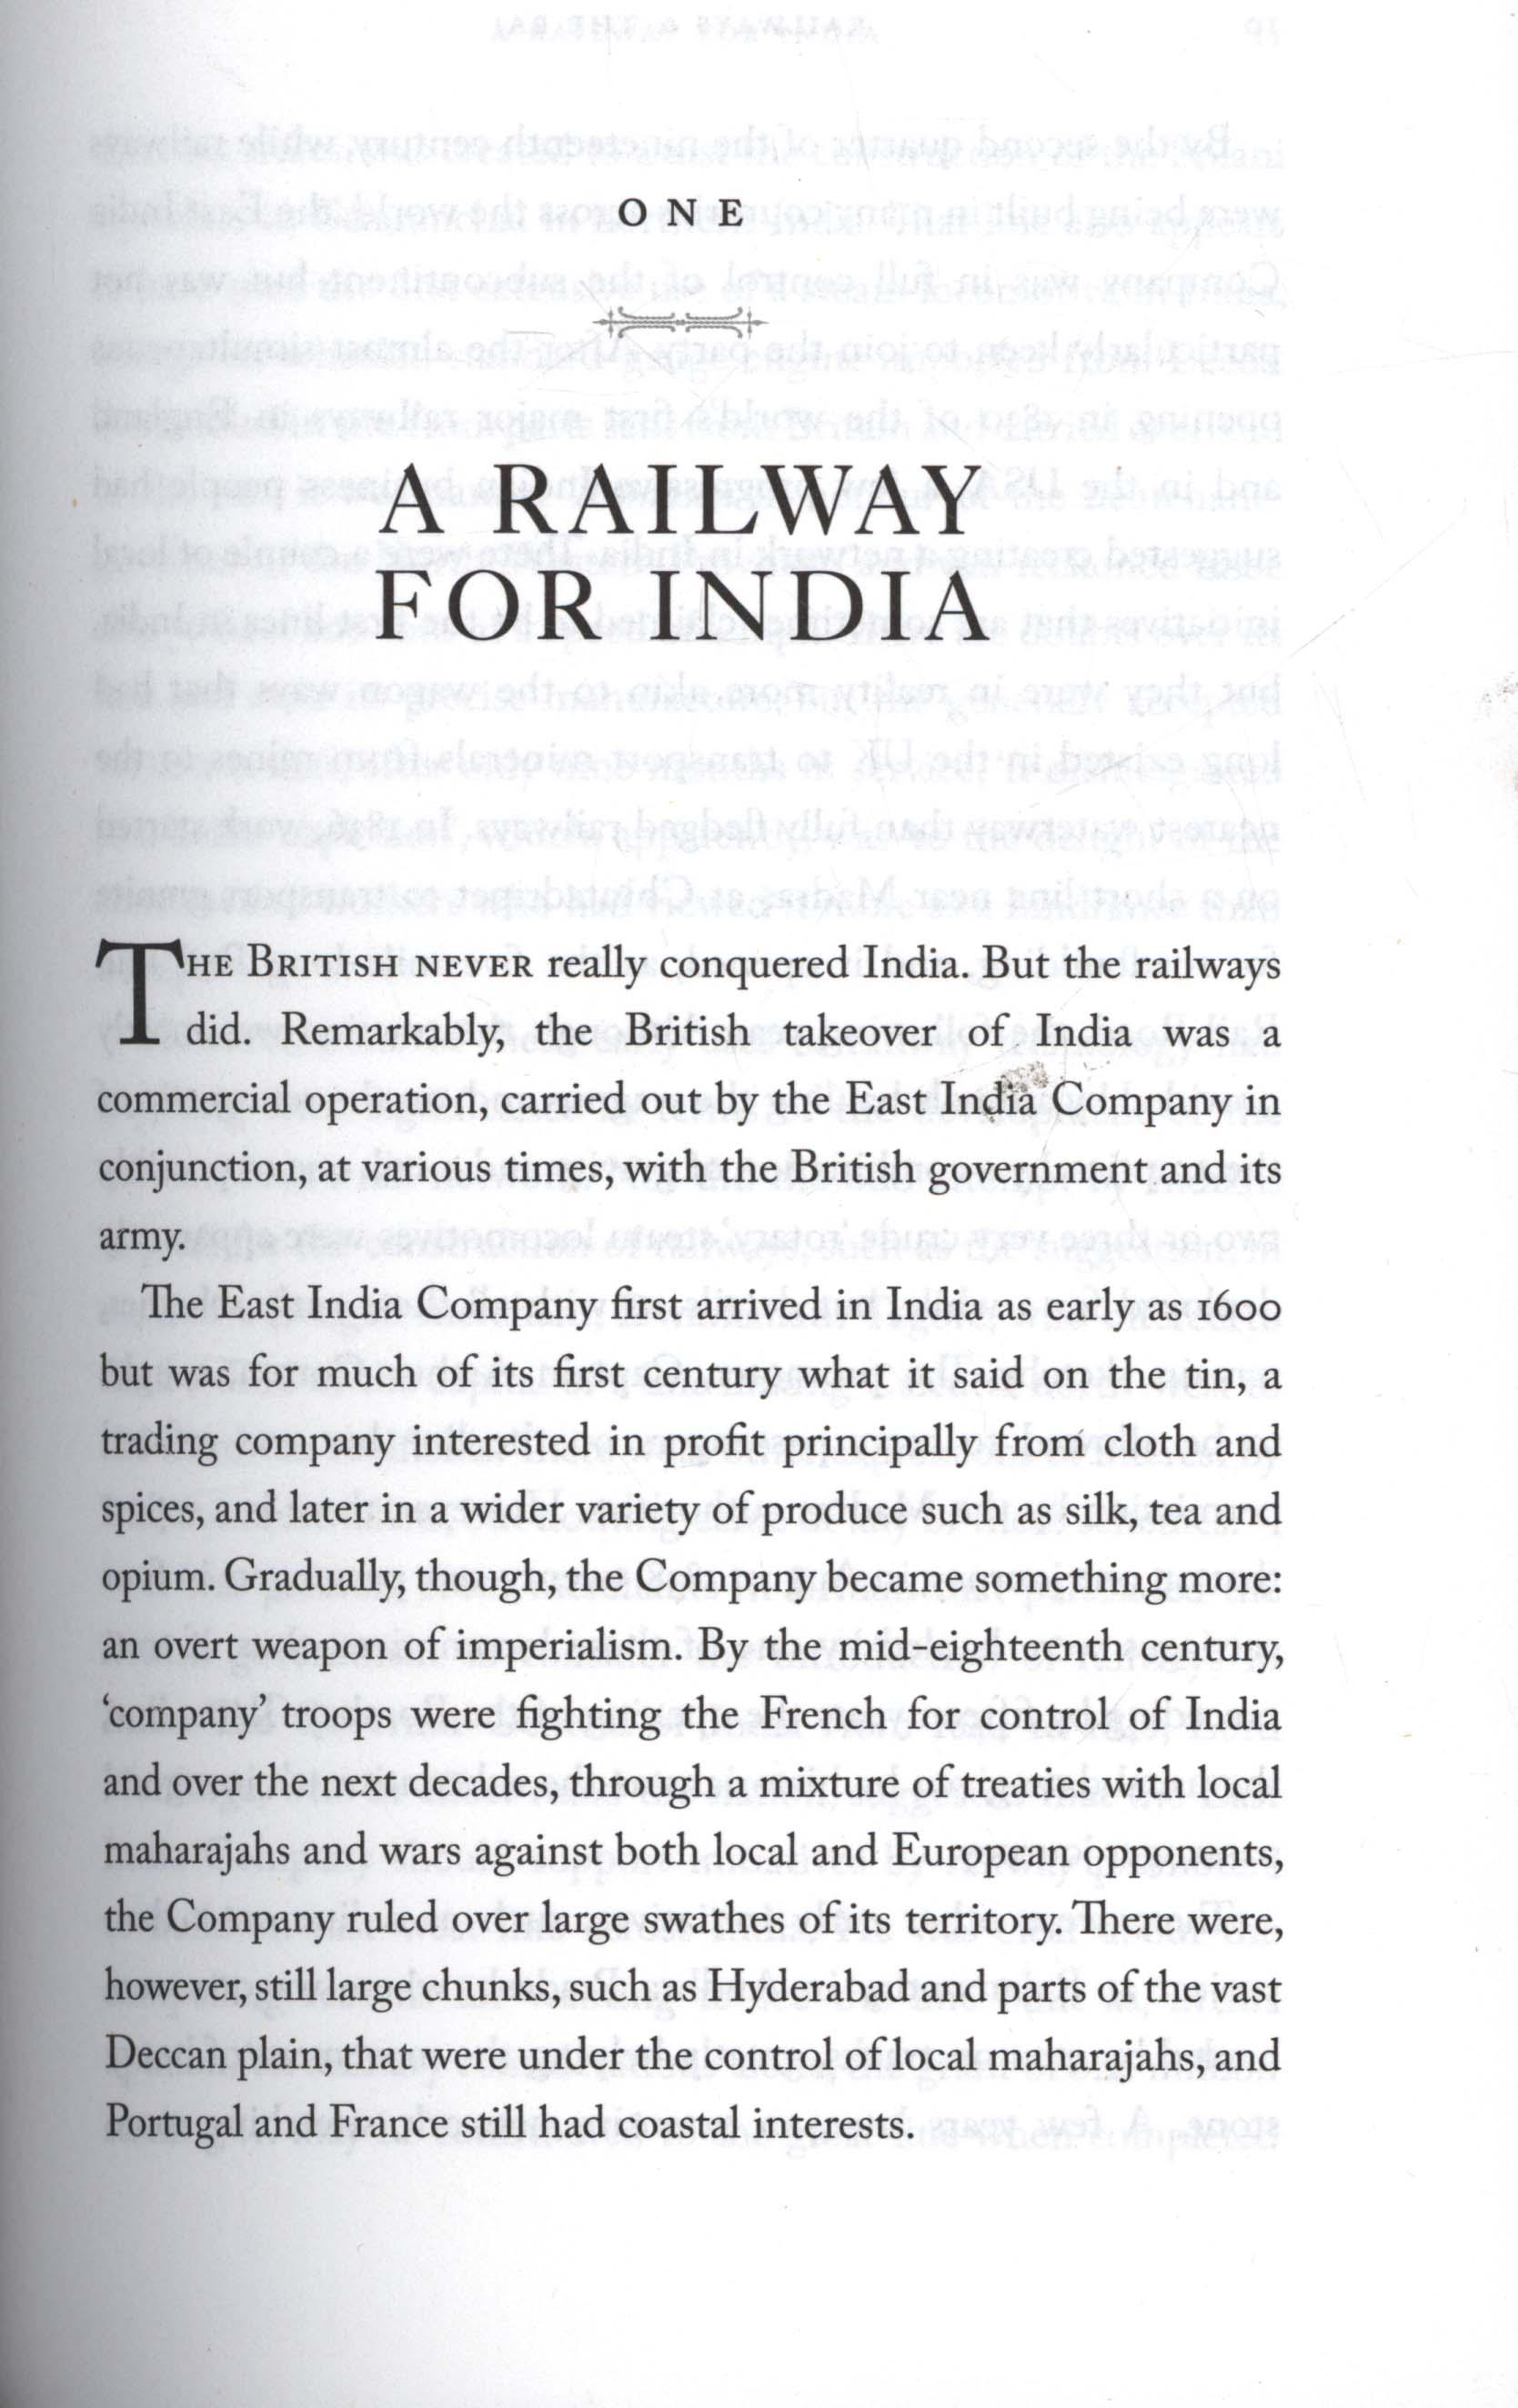 Railways and The Raj